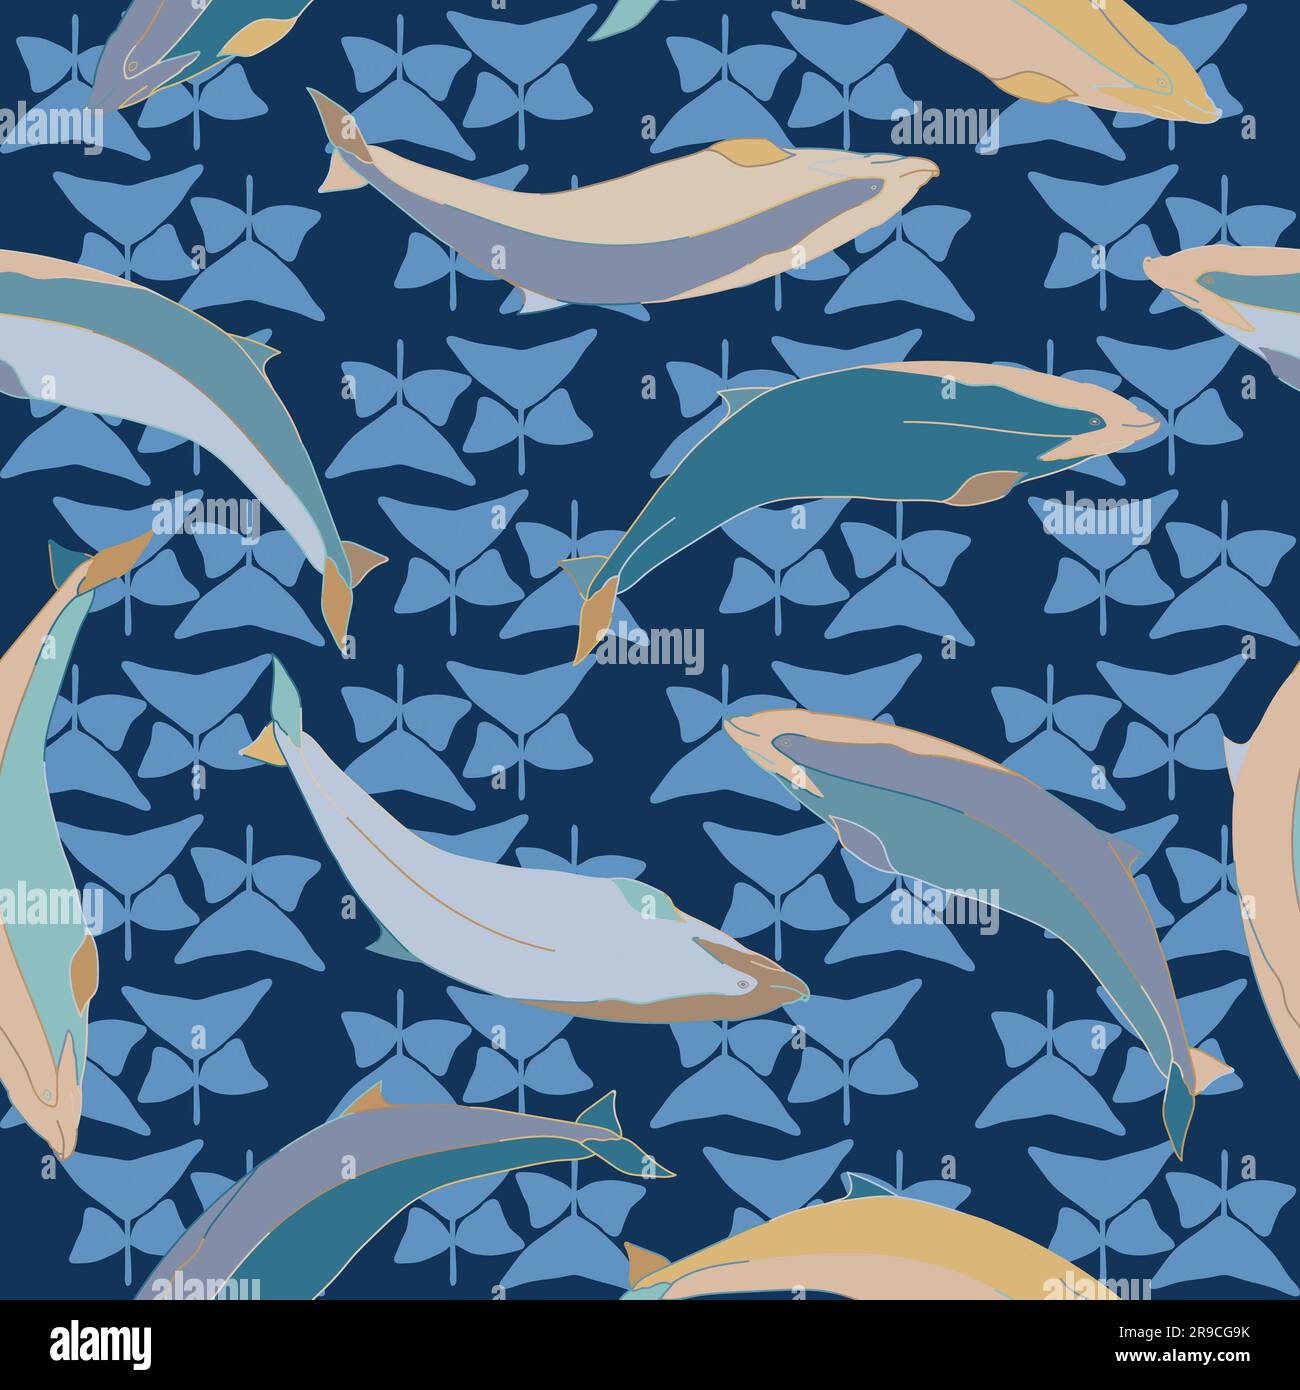 whales marine seamless pattern. Sea life vector illustration. Background repeat wallpaper cartoon doodle illustration design.  Stock Vector